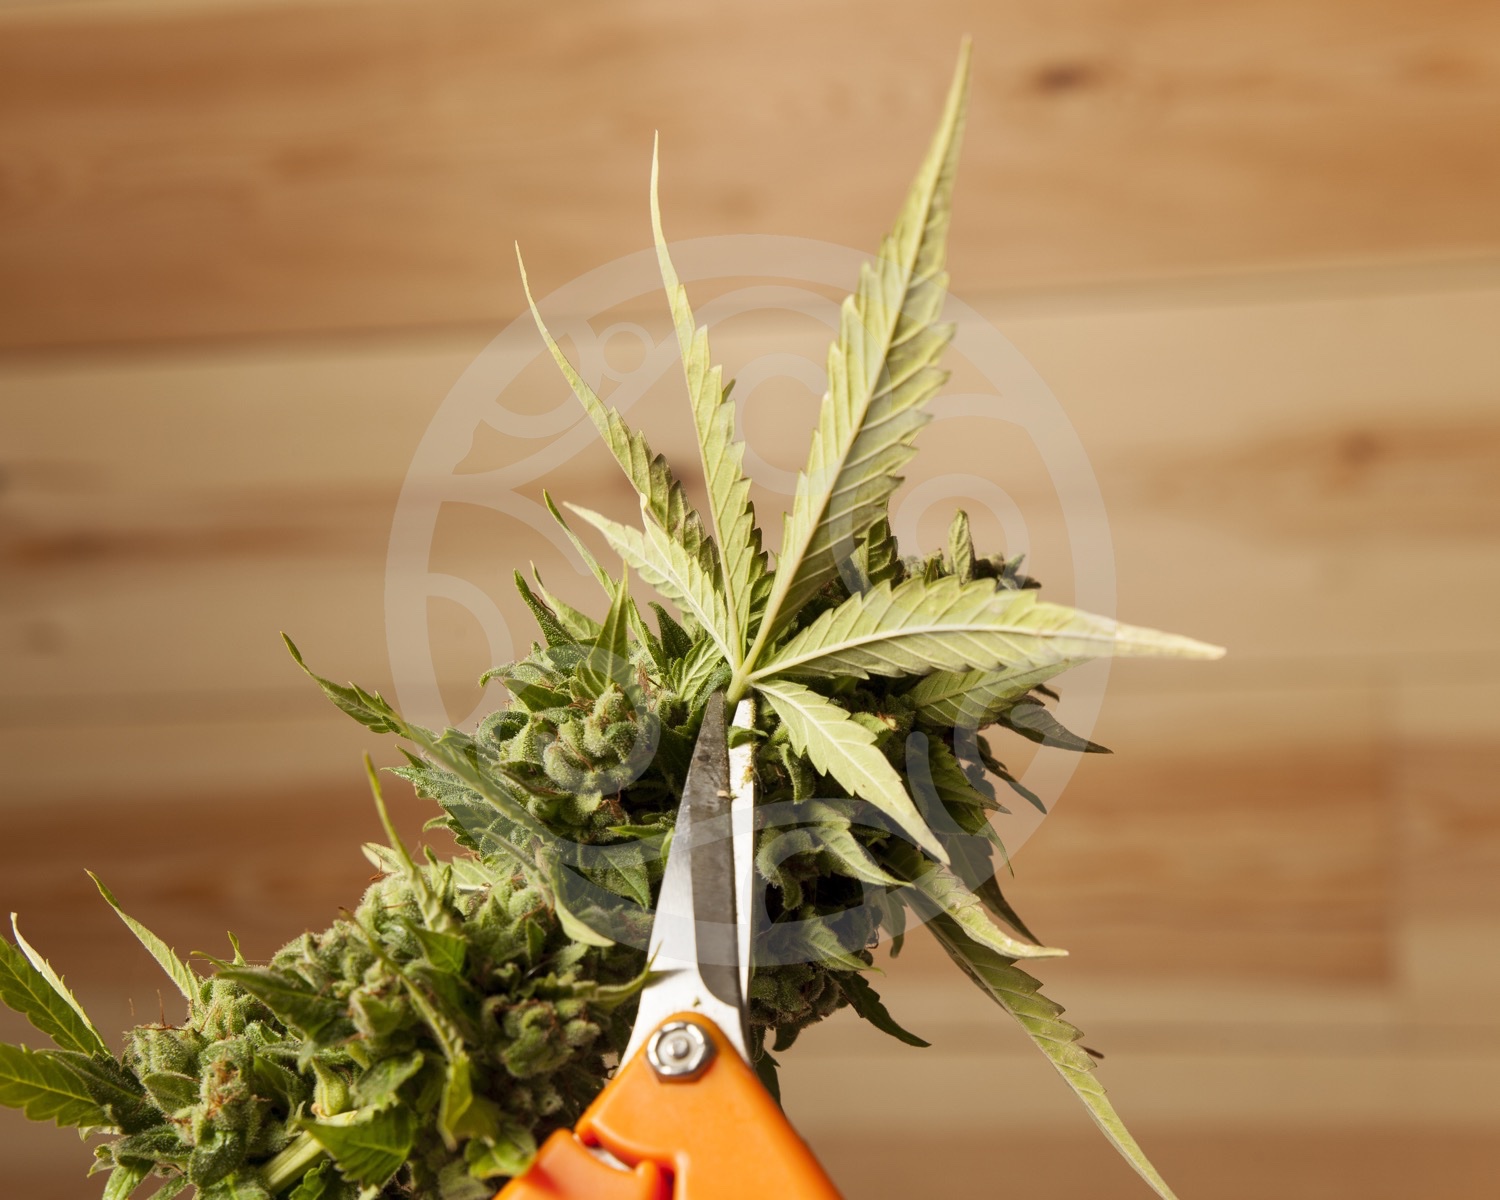 How to trim cannabis